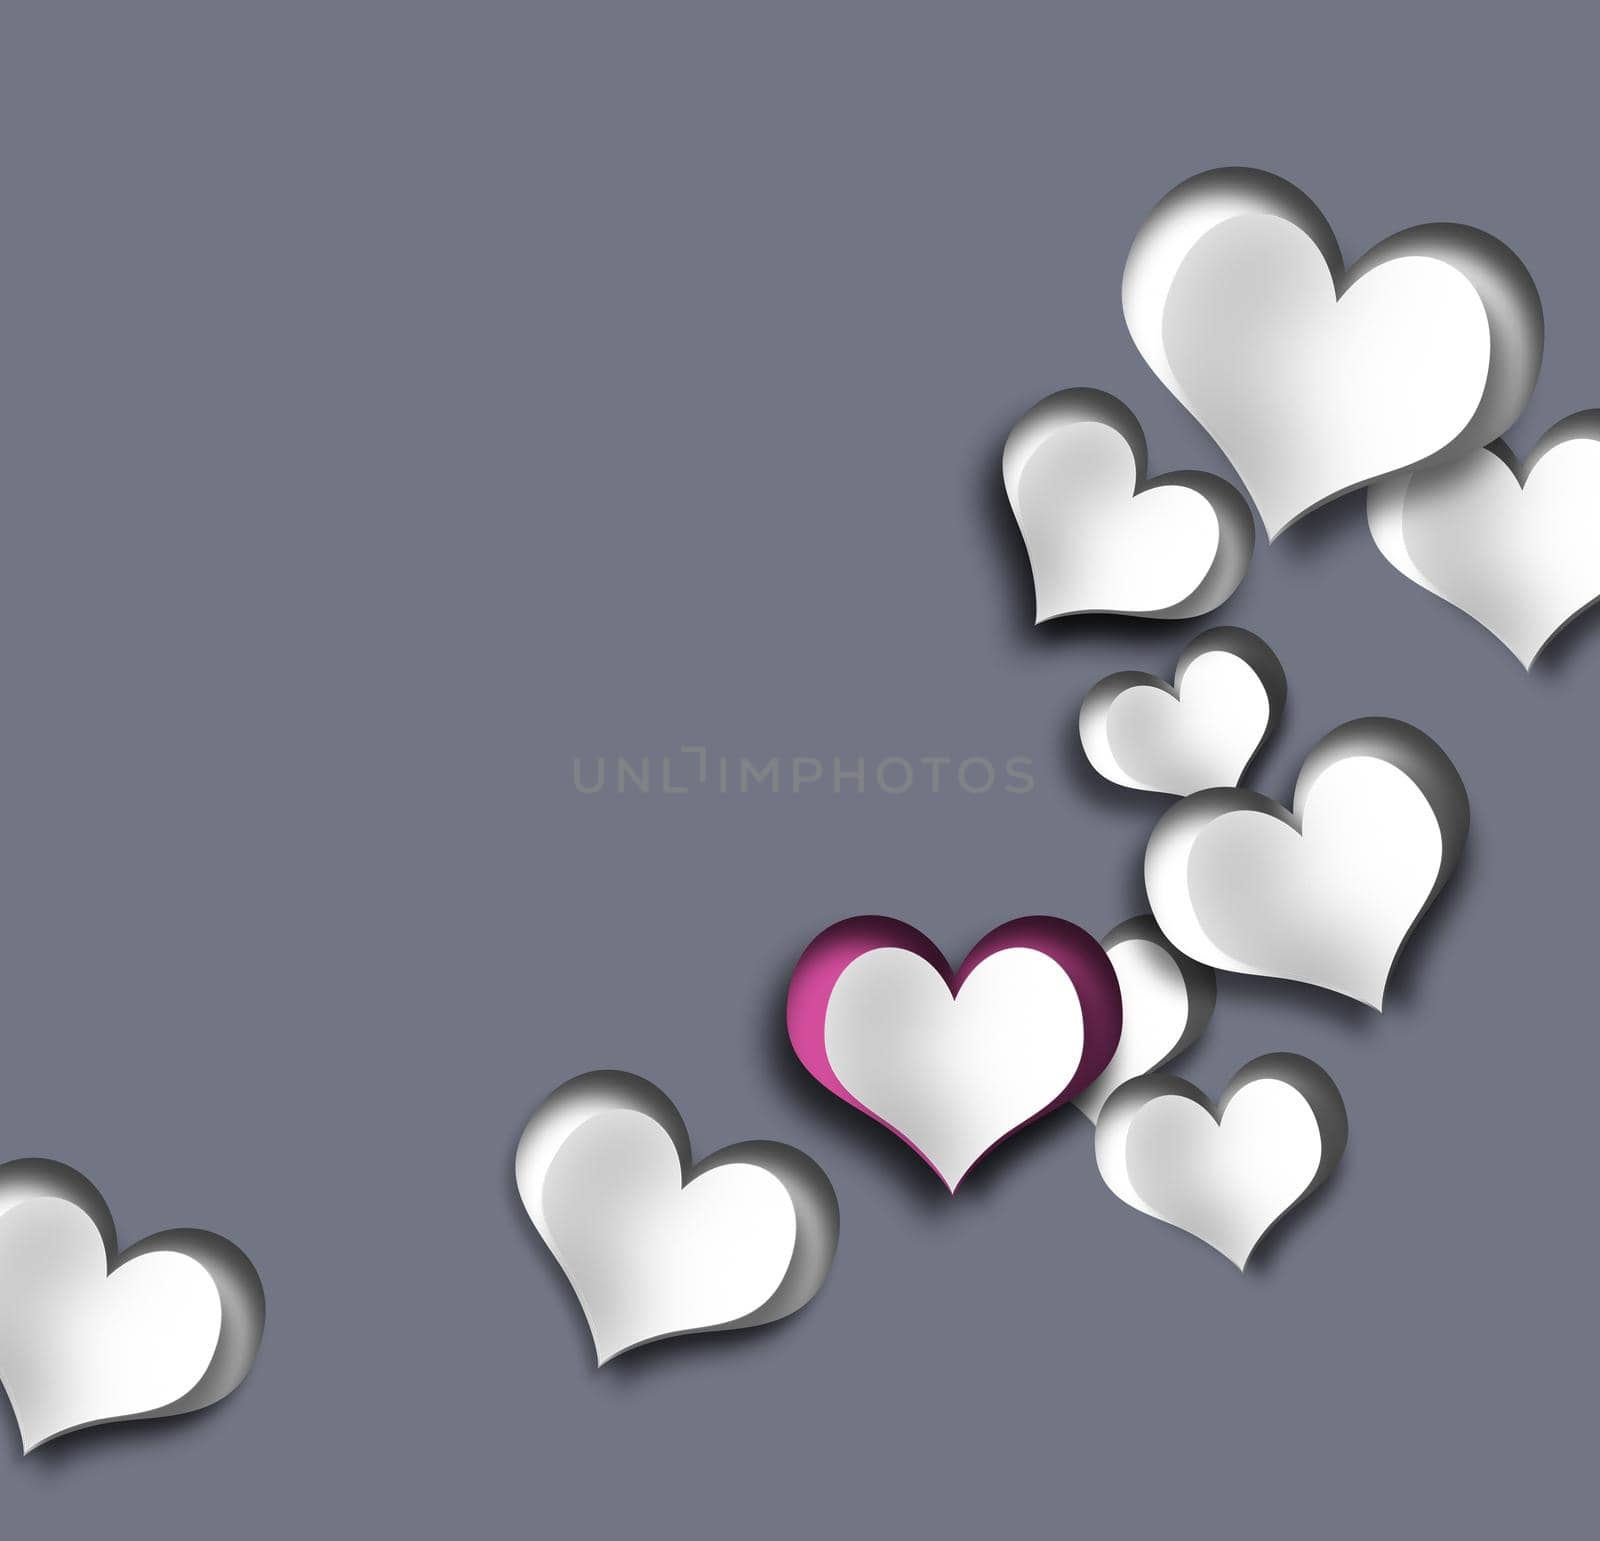 Elegant modern unusual love card, paper hearts, on grey pastel background. 3D illustration. Romantic template for wedding, invitation, Valentine's card